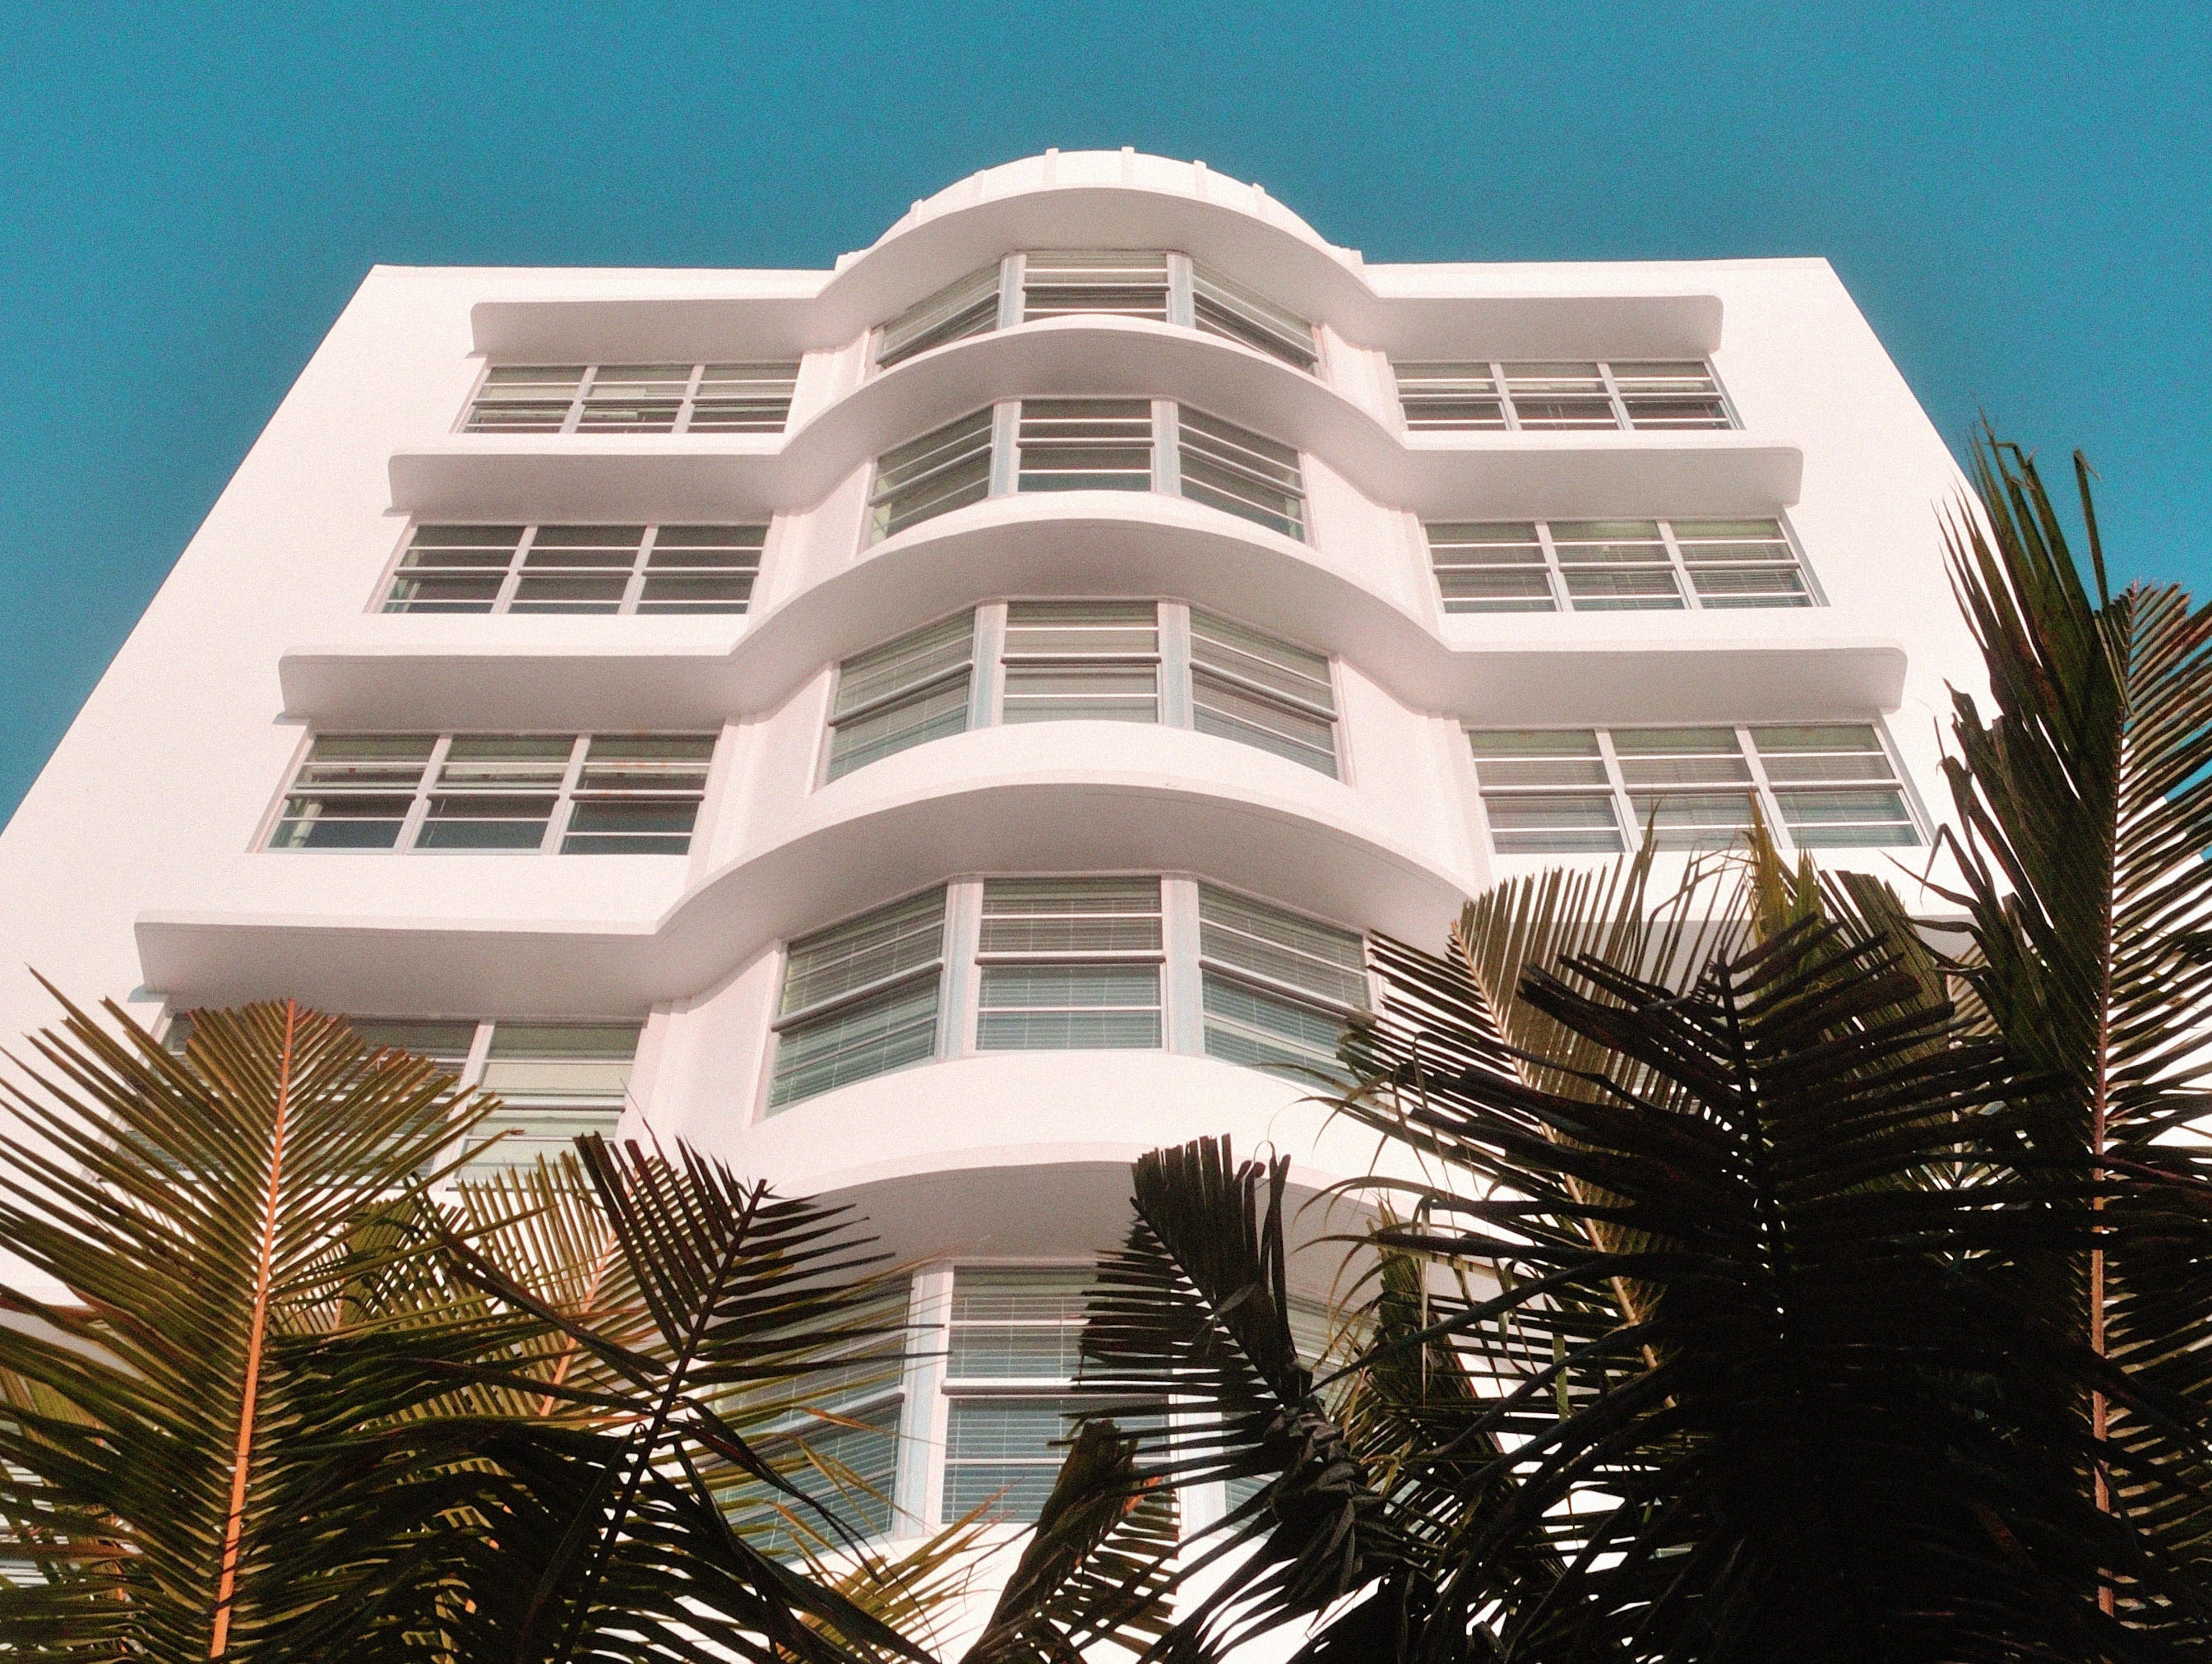 The exterior of the new Metropolitan by COMO hotel in midbeach Miami.